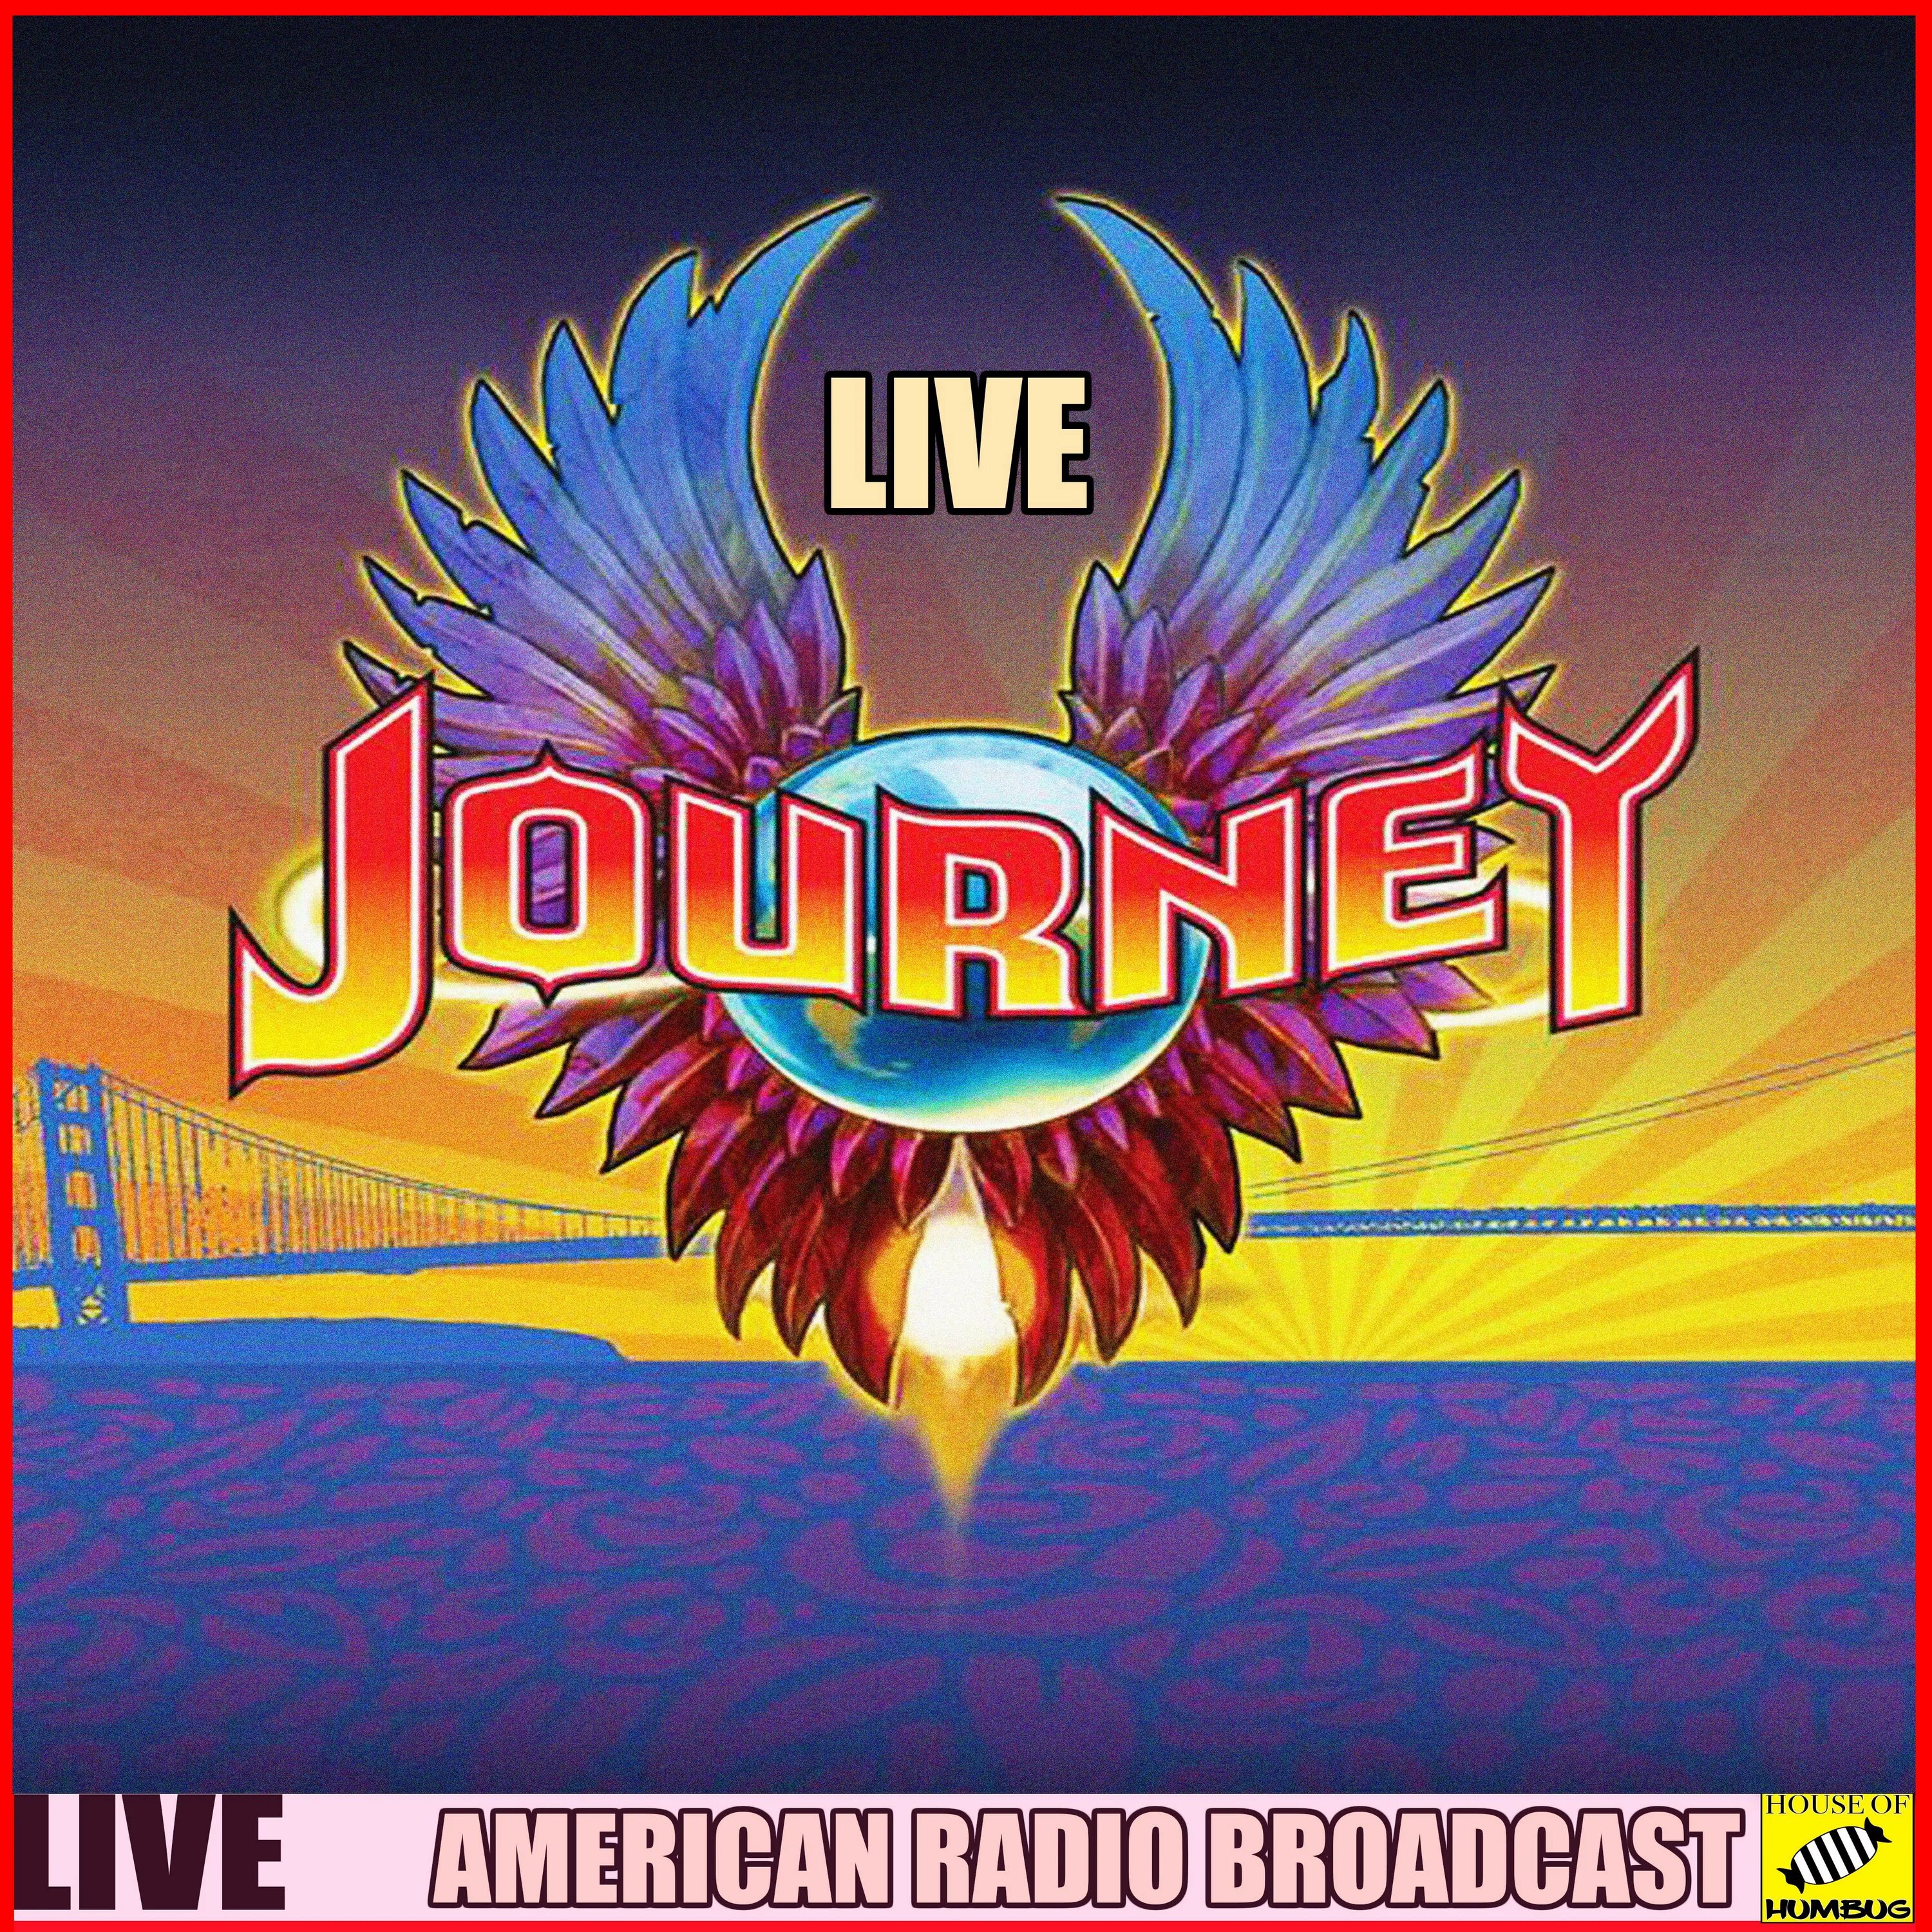 Live journey. Группа Journey. Journey группа альбомы. Journey обложки альбомов. Journey группа логотип.